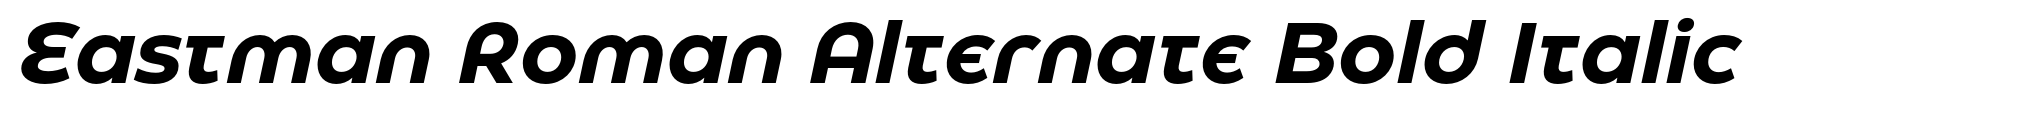 Eastman Roman Alternate Bold Italic image